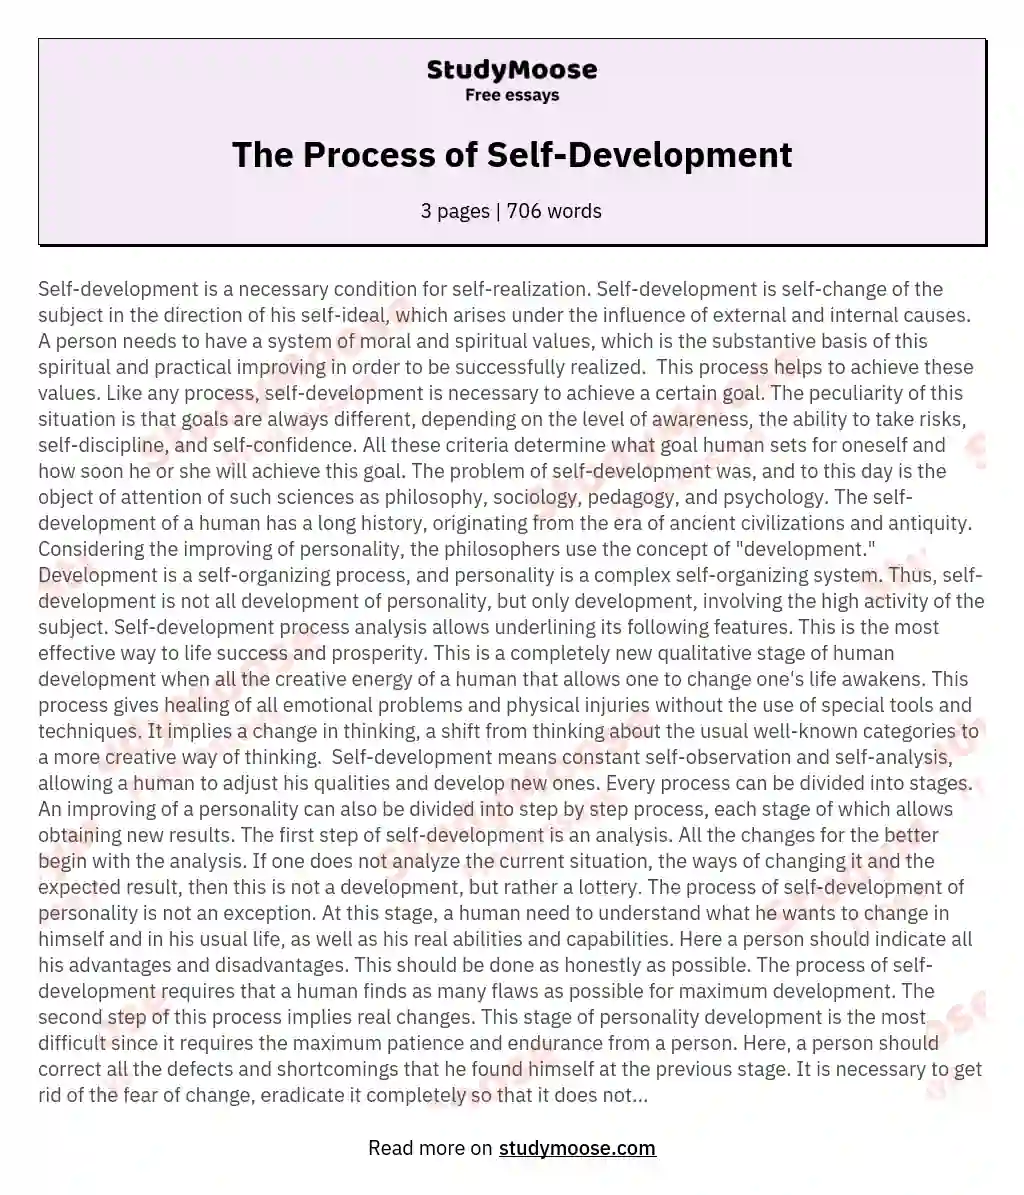 The Process of Self-Development essay